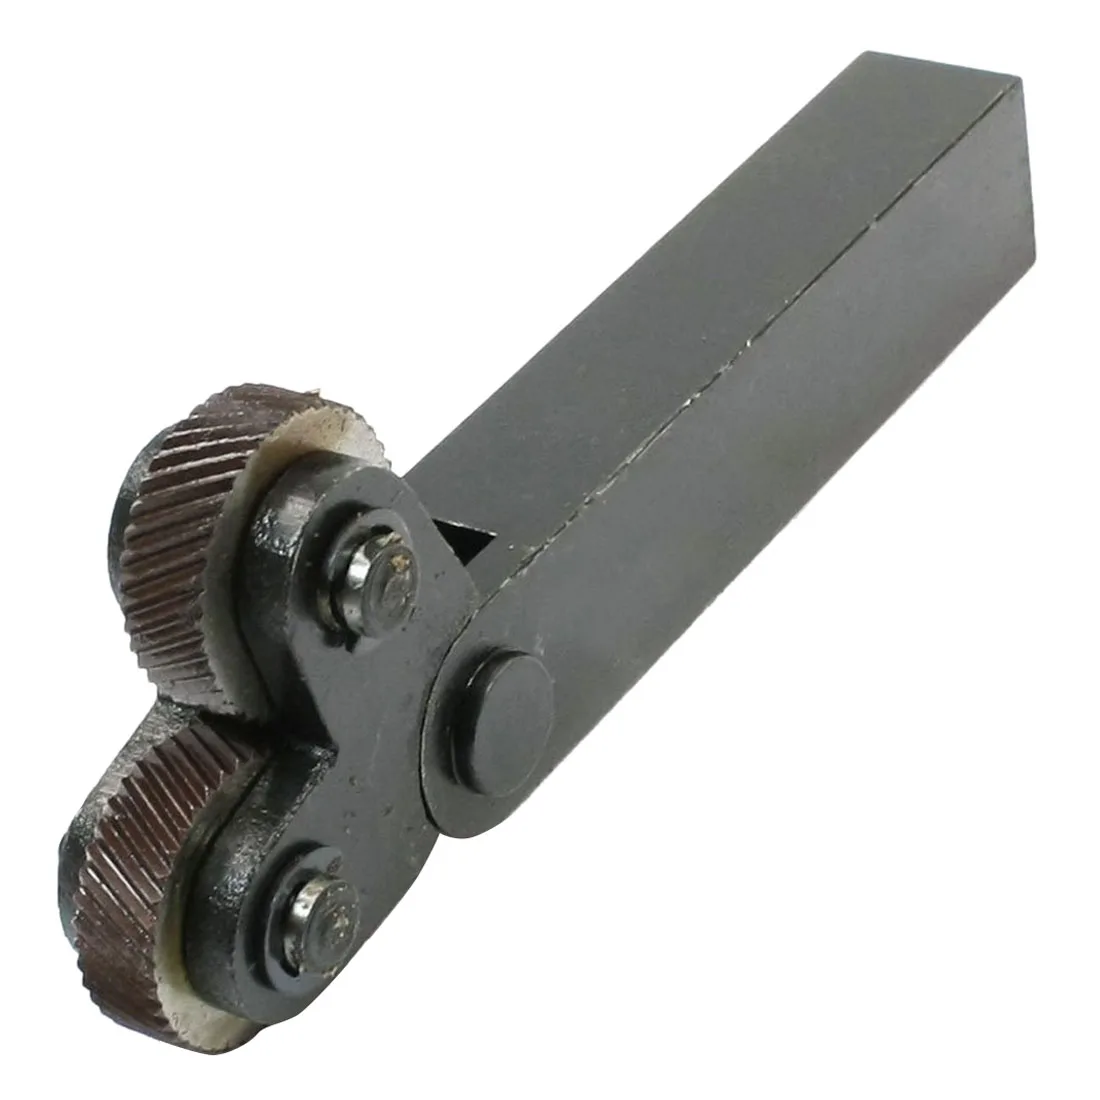 

1.8mm Pitch Dual Wheel Slant Teeth Knurling Tool for Metal Lathe